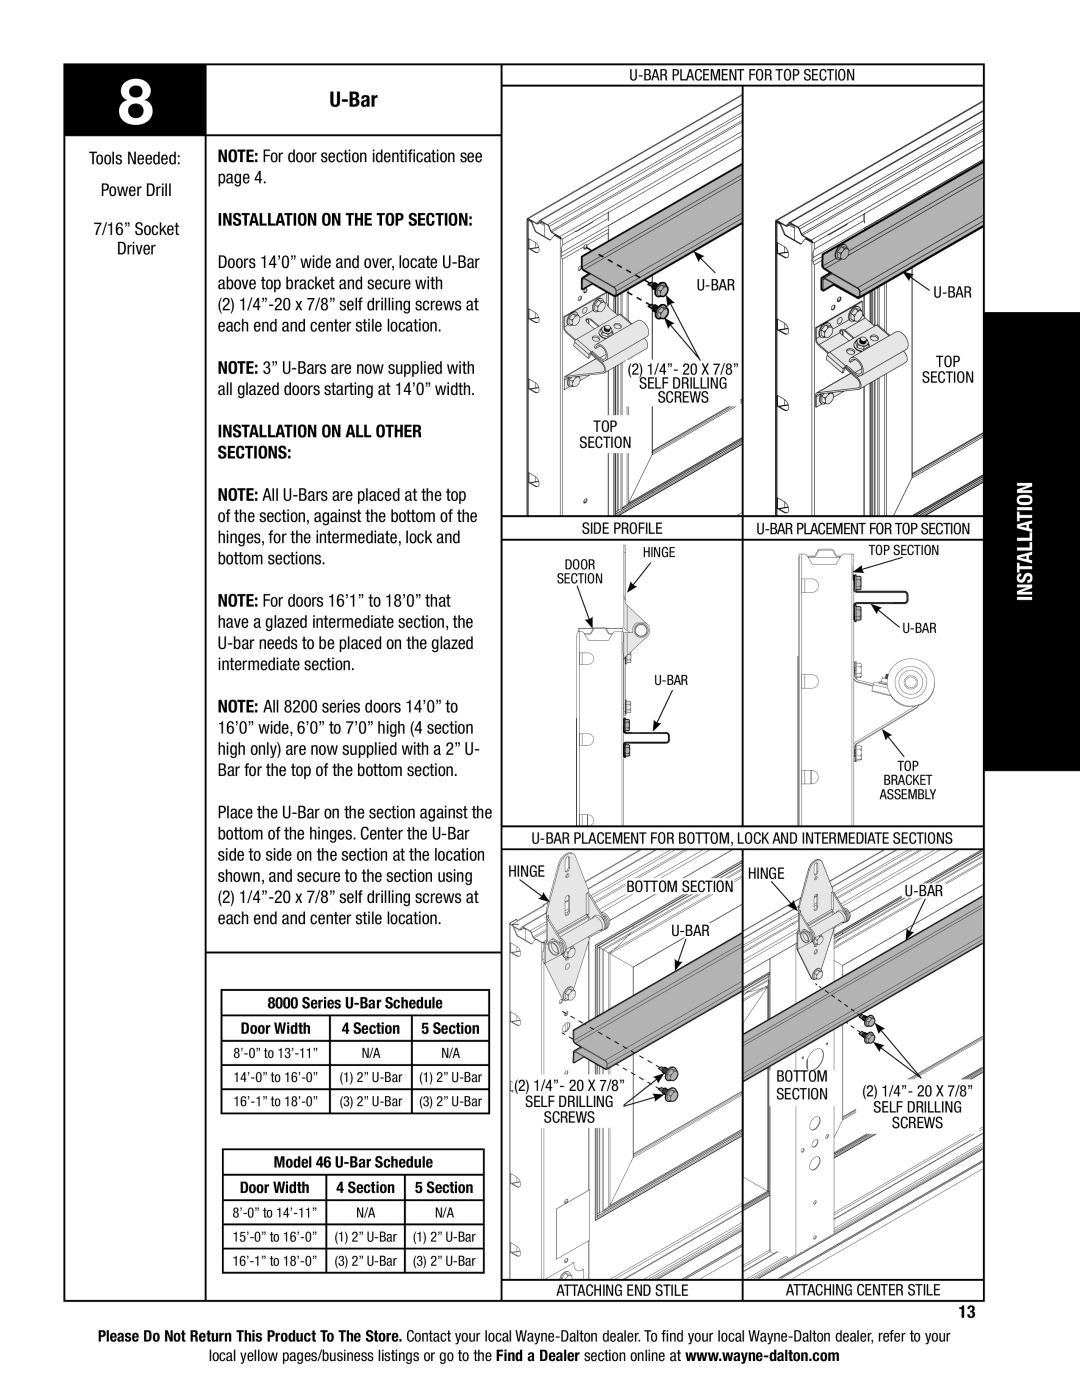 Wayne-Dalton 46 installation instructions U-Bar 